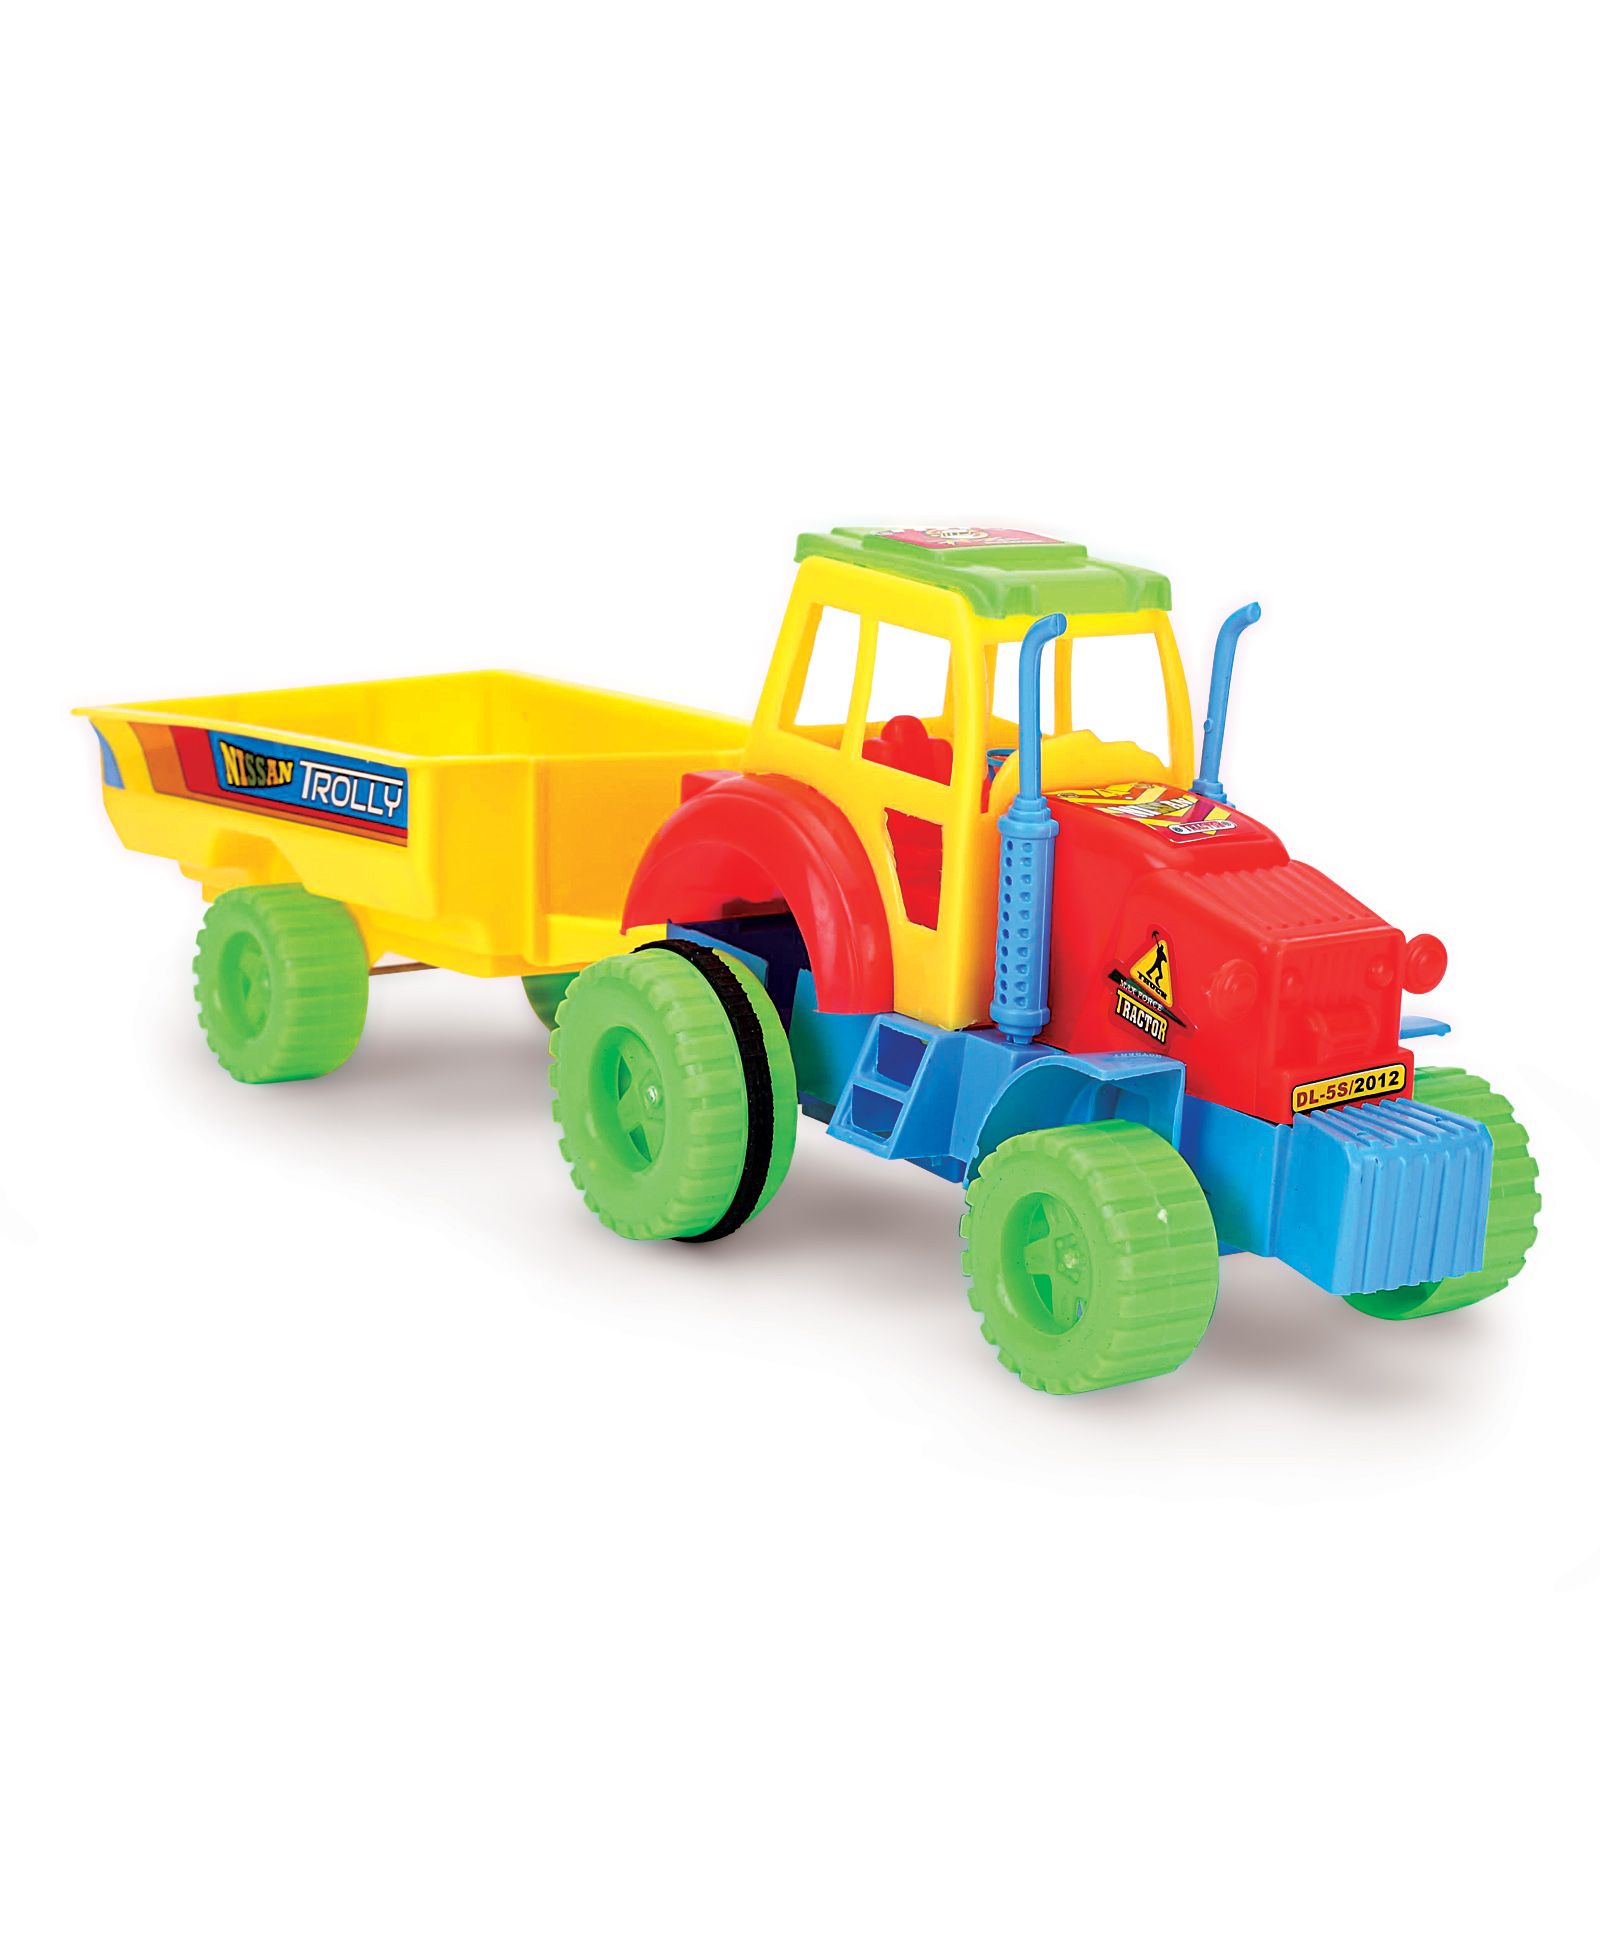 kids tractor trolley